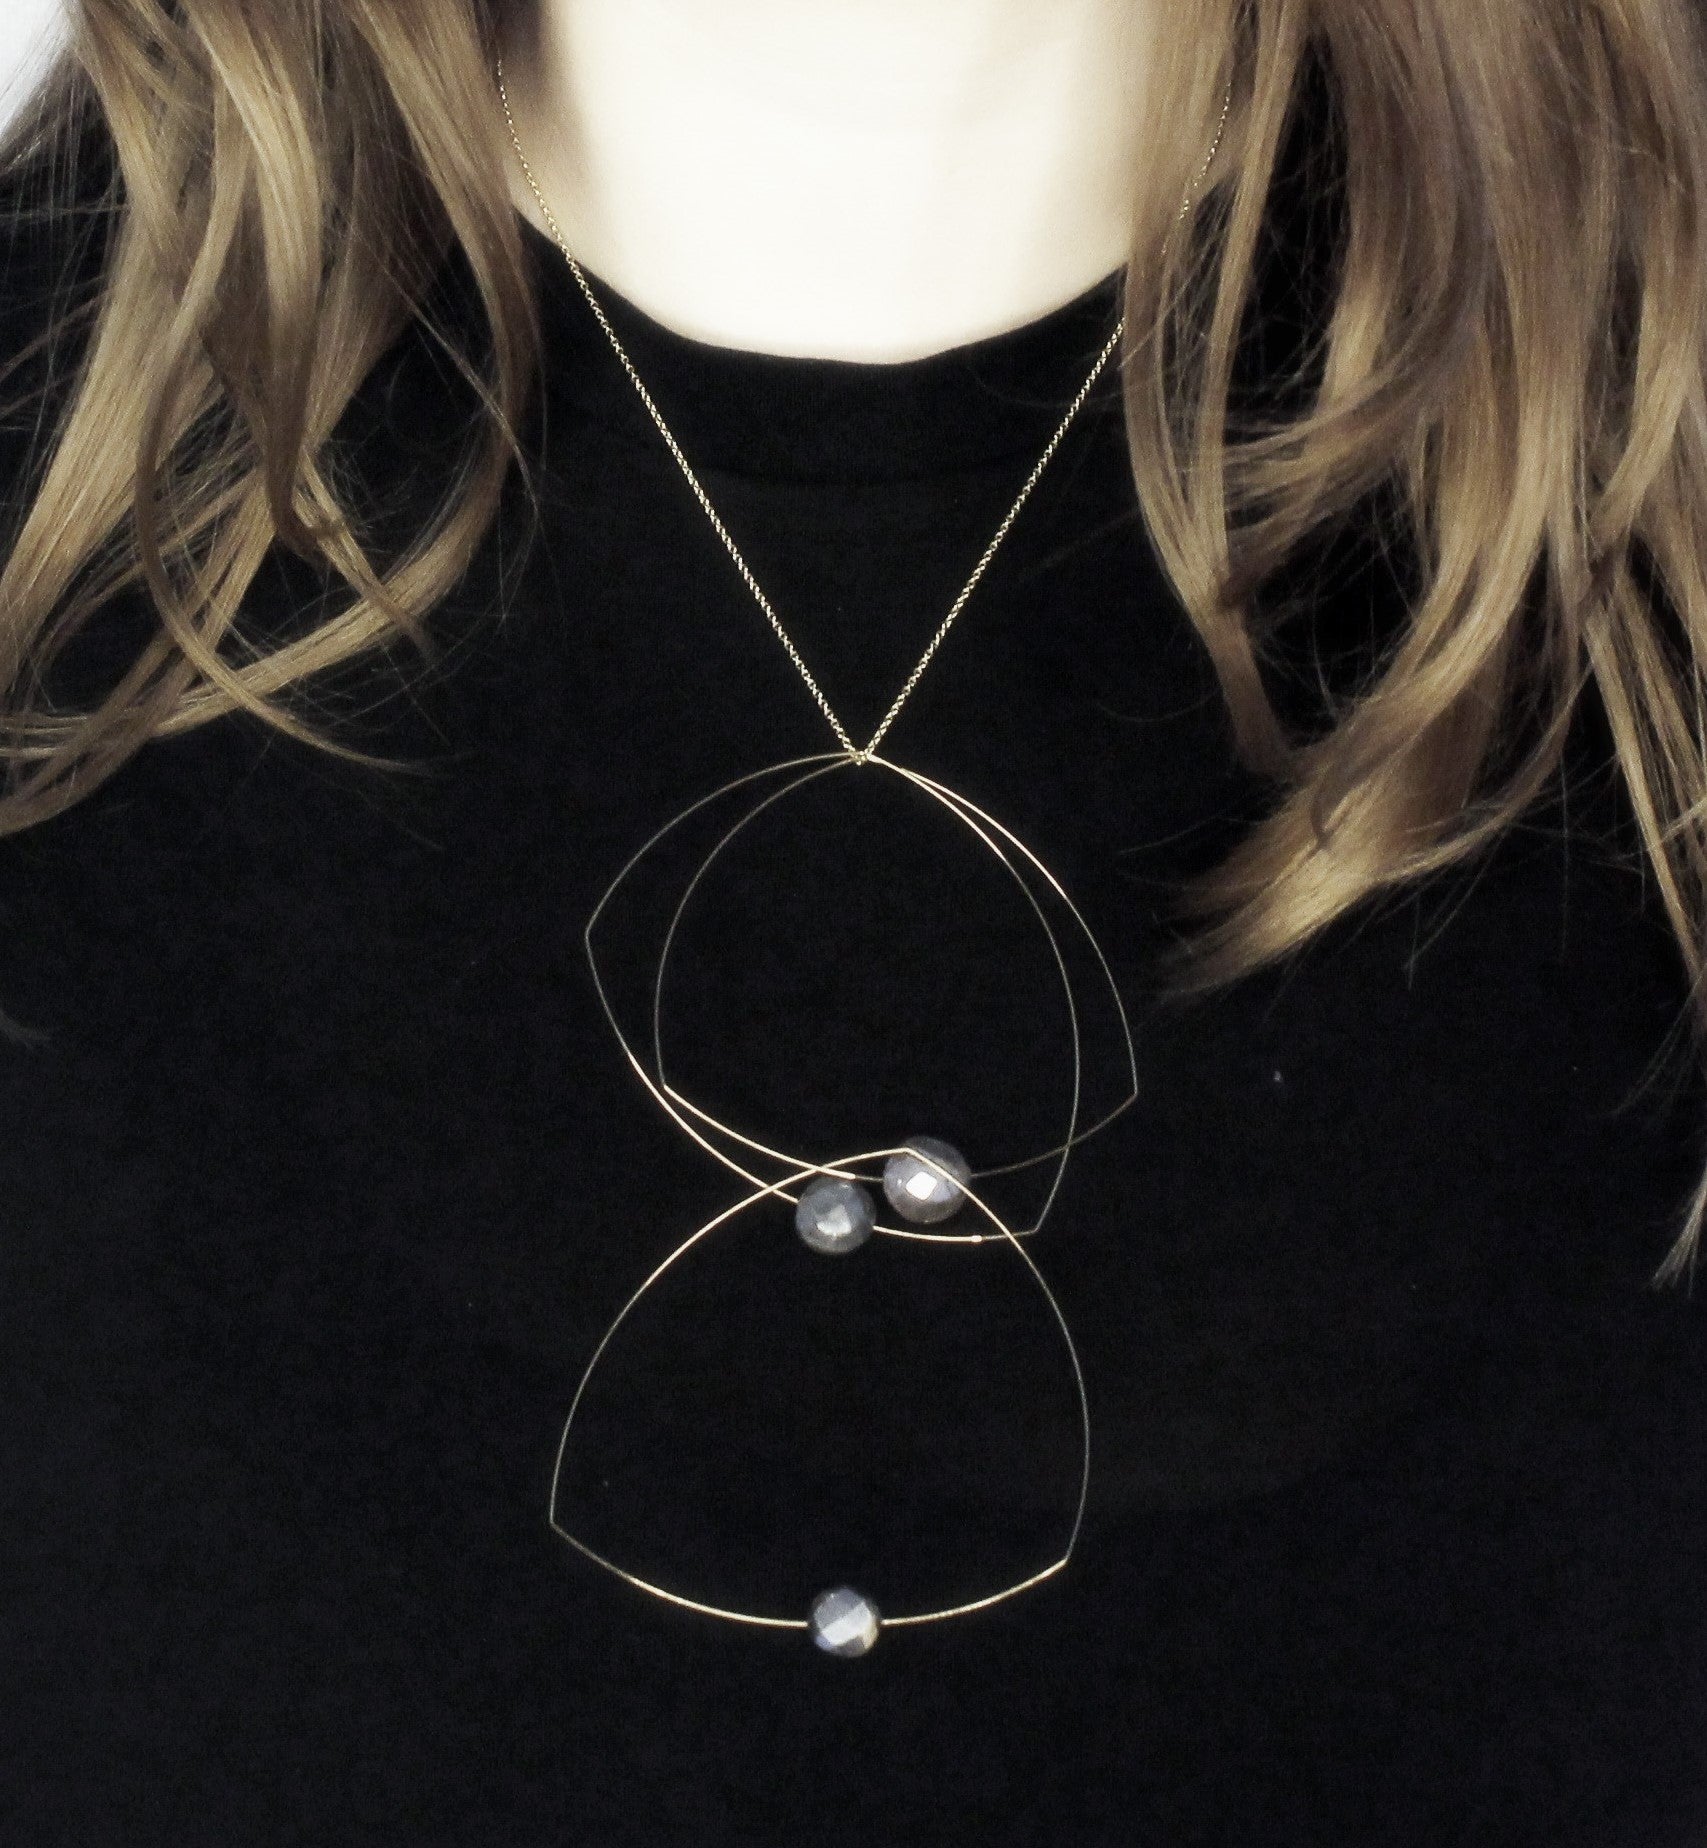 hand-cut gemstone necklace to wear in multiple ways